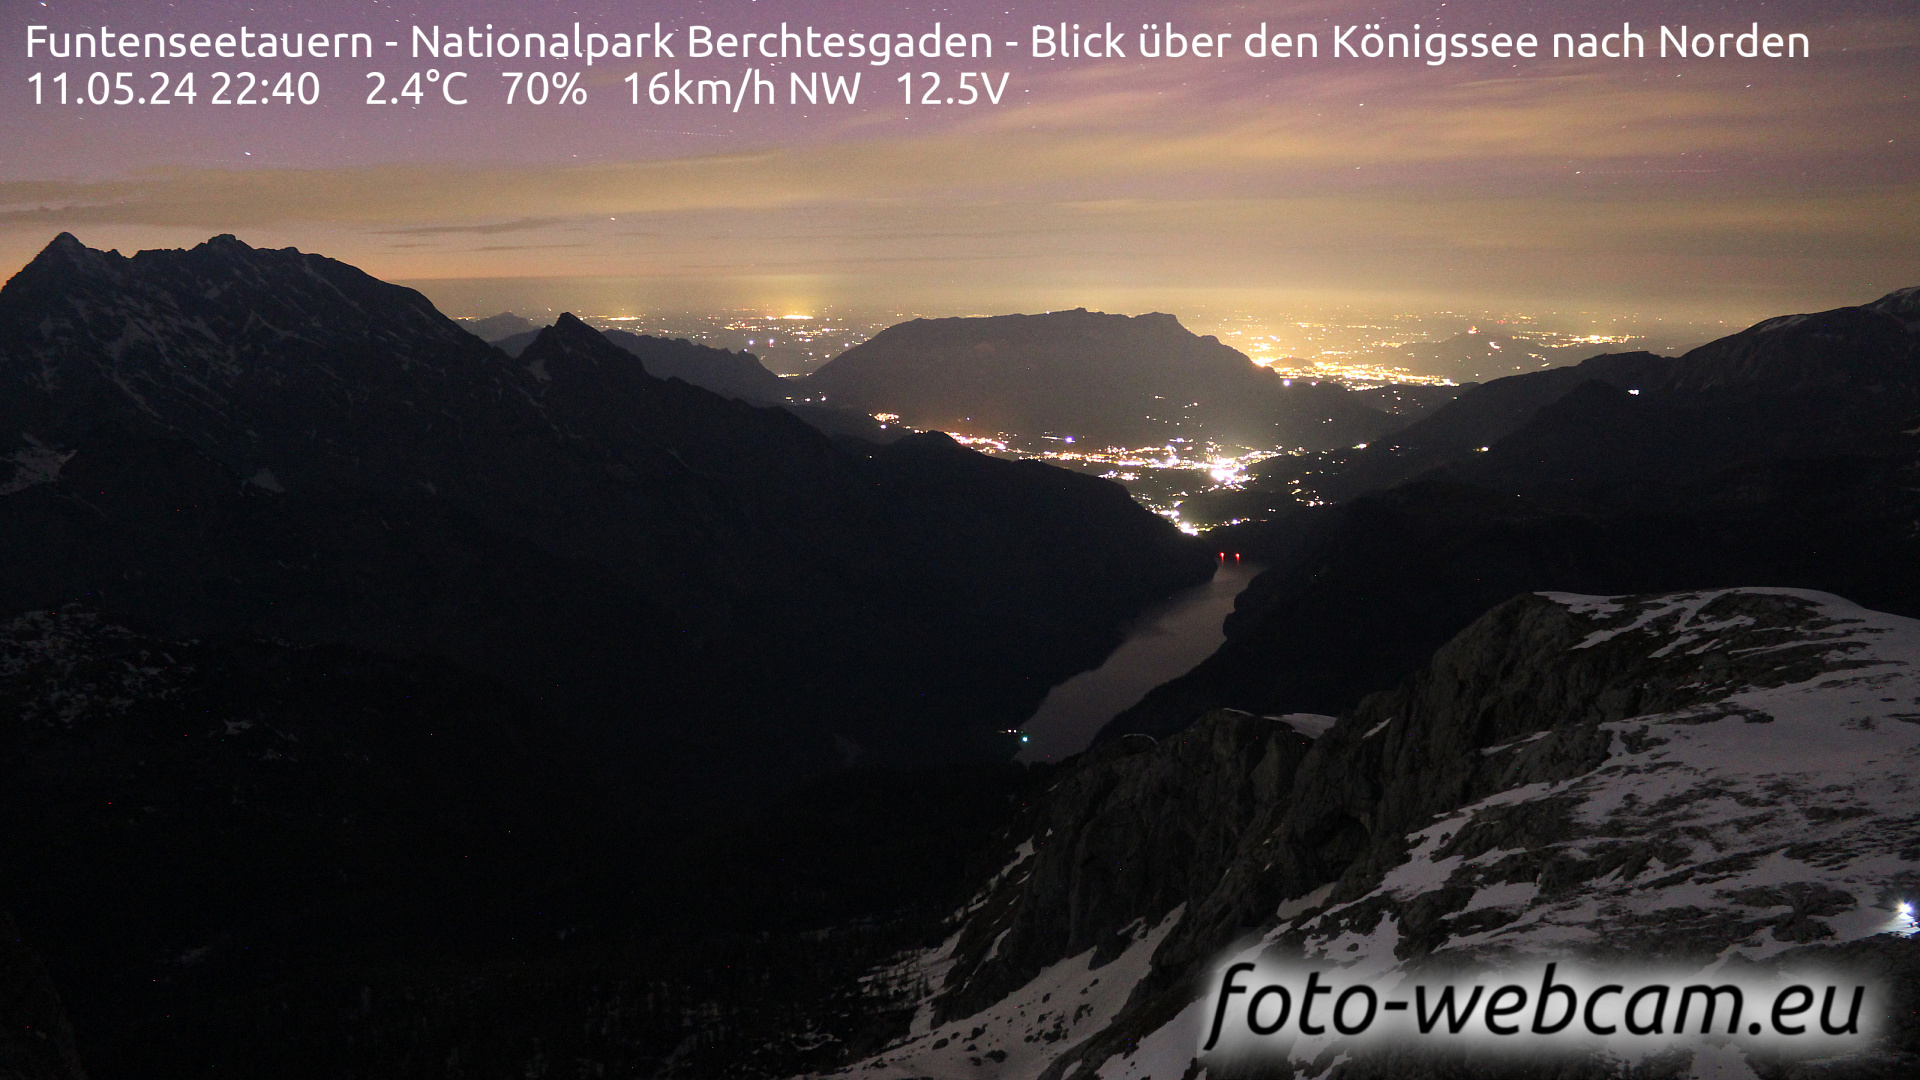 Berchtesgaden Me. 22:48